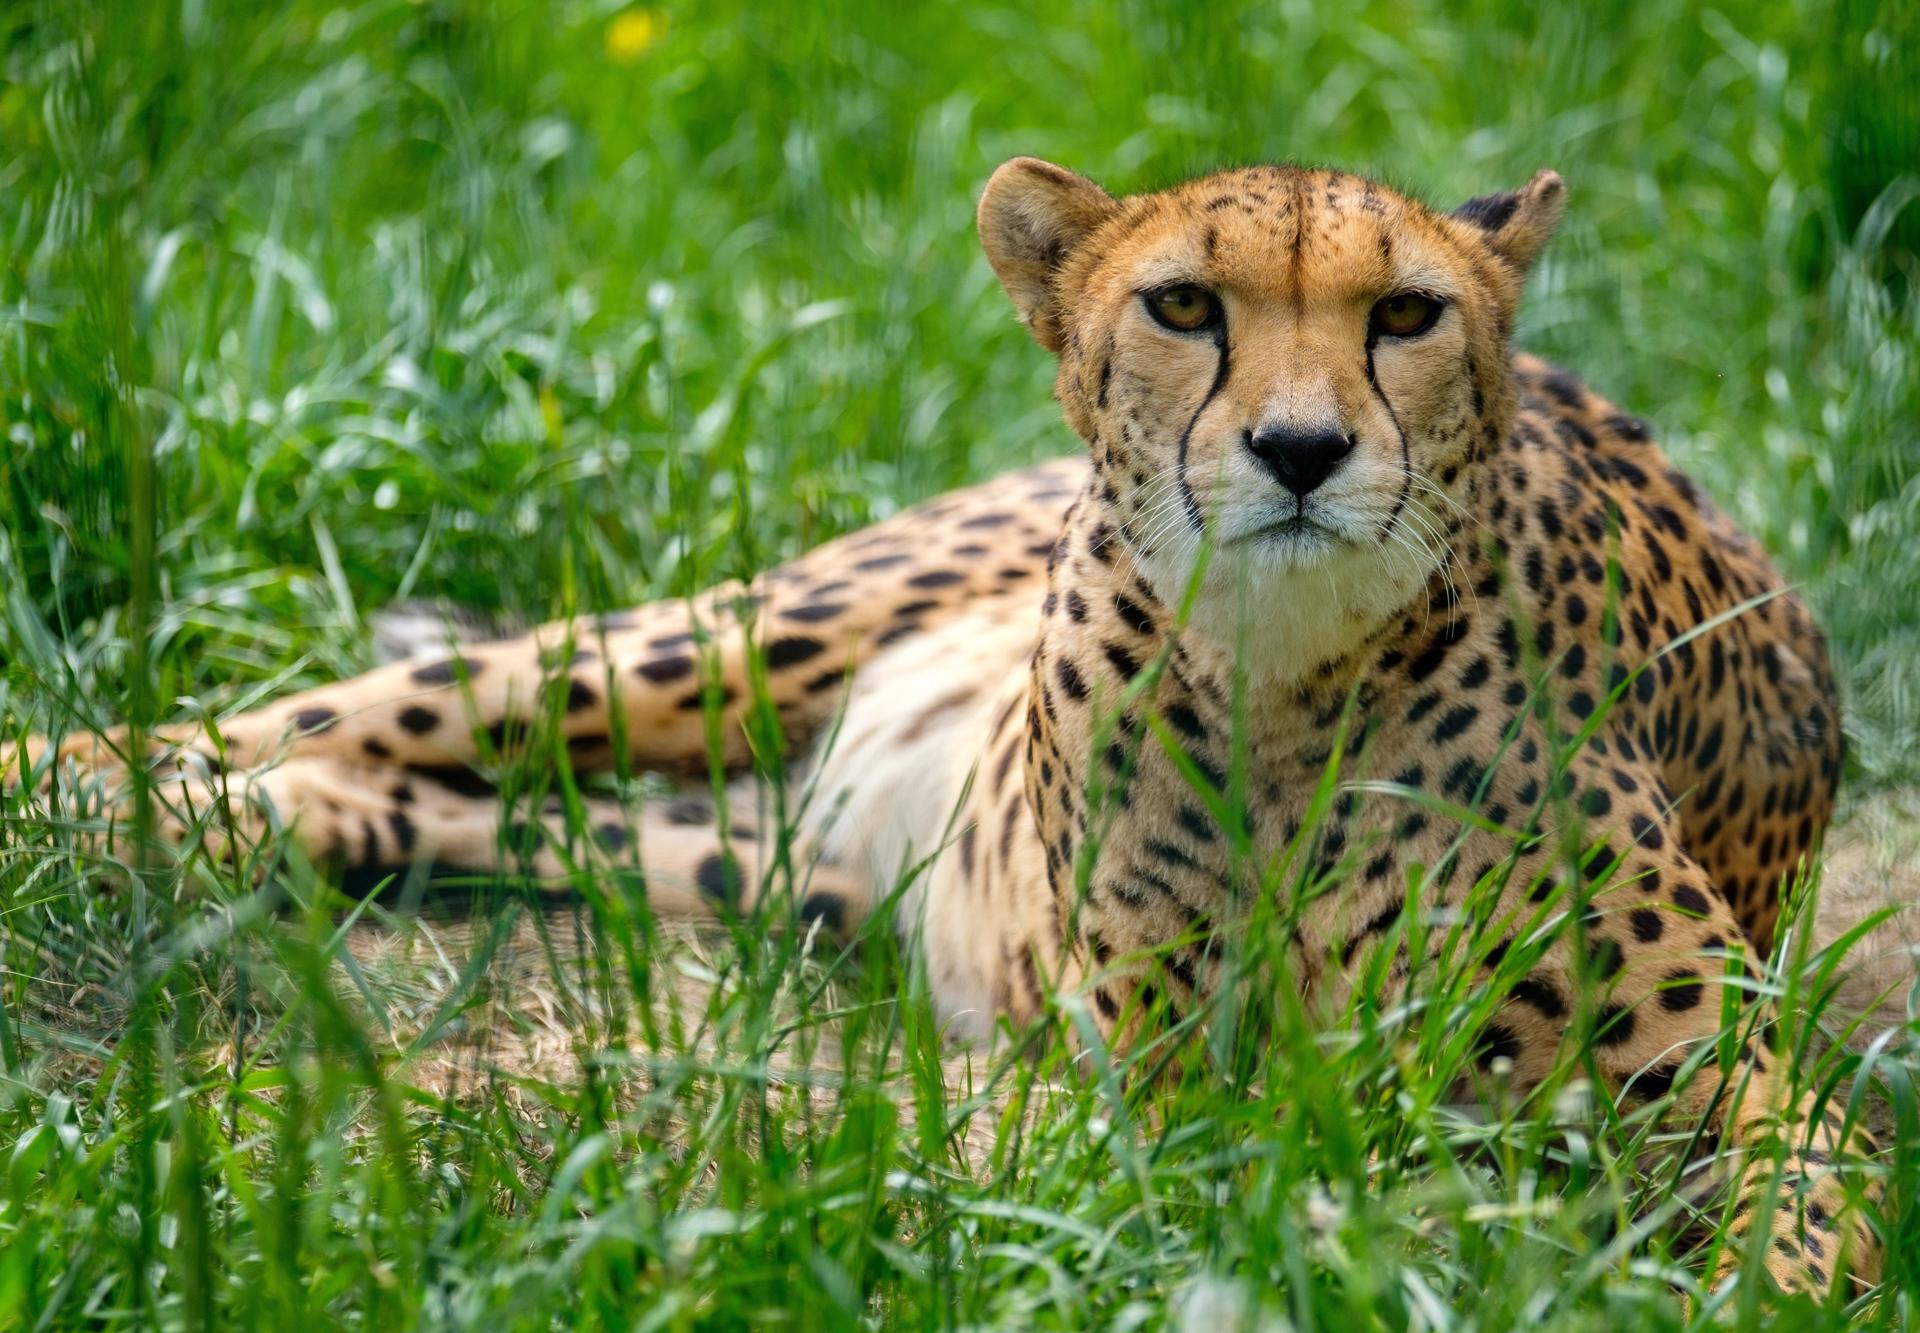 A cheetah (Acinonyx jubatus) in Silesian Zoological Garden in Chorzow, Poland, 13 May 2020. EFE/EPA/FILE/ANDRZEJ GRYGIEL POLAND OUT